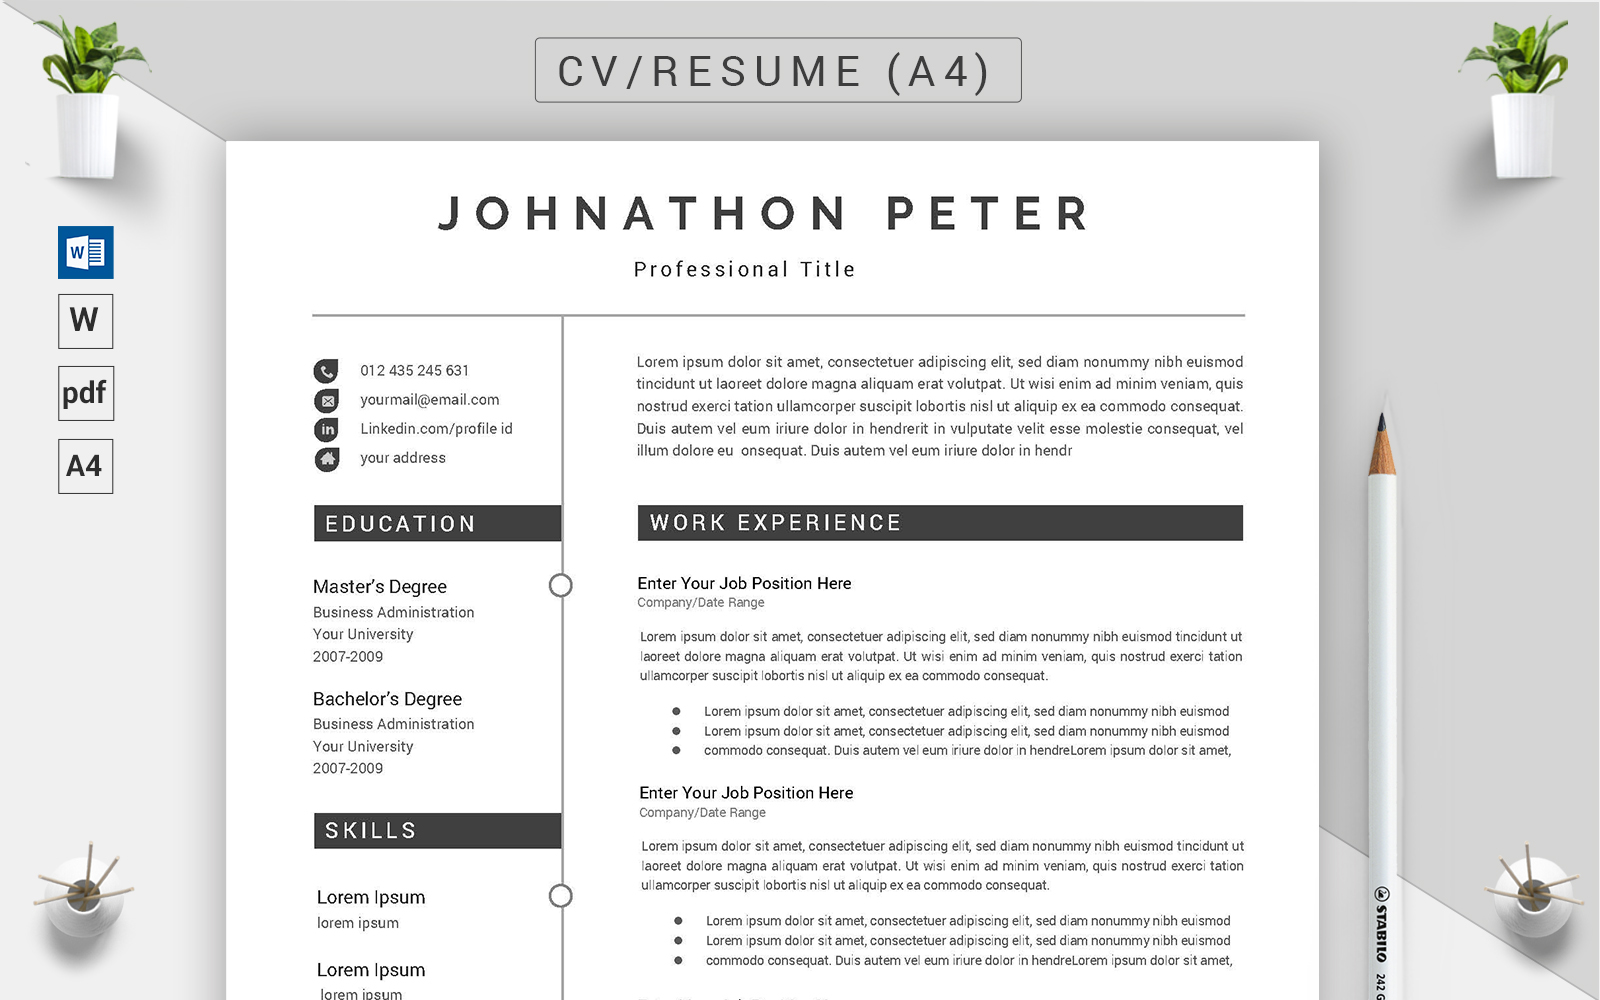 Johnathon Peter - CV & Resume Template